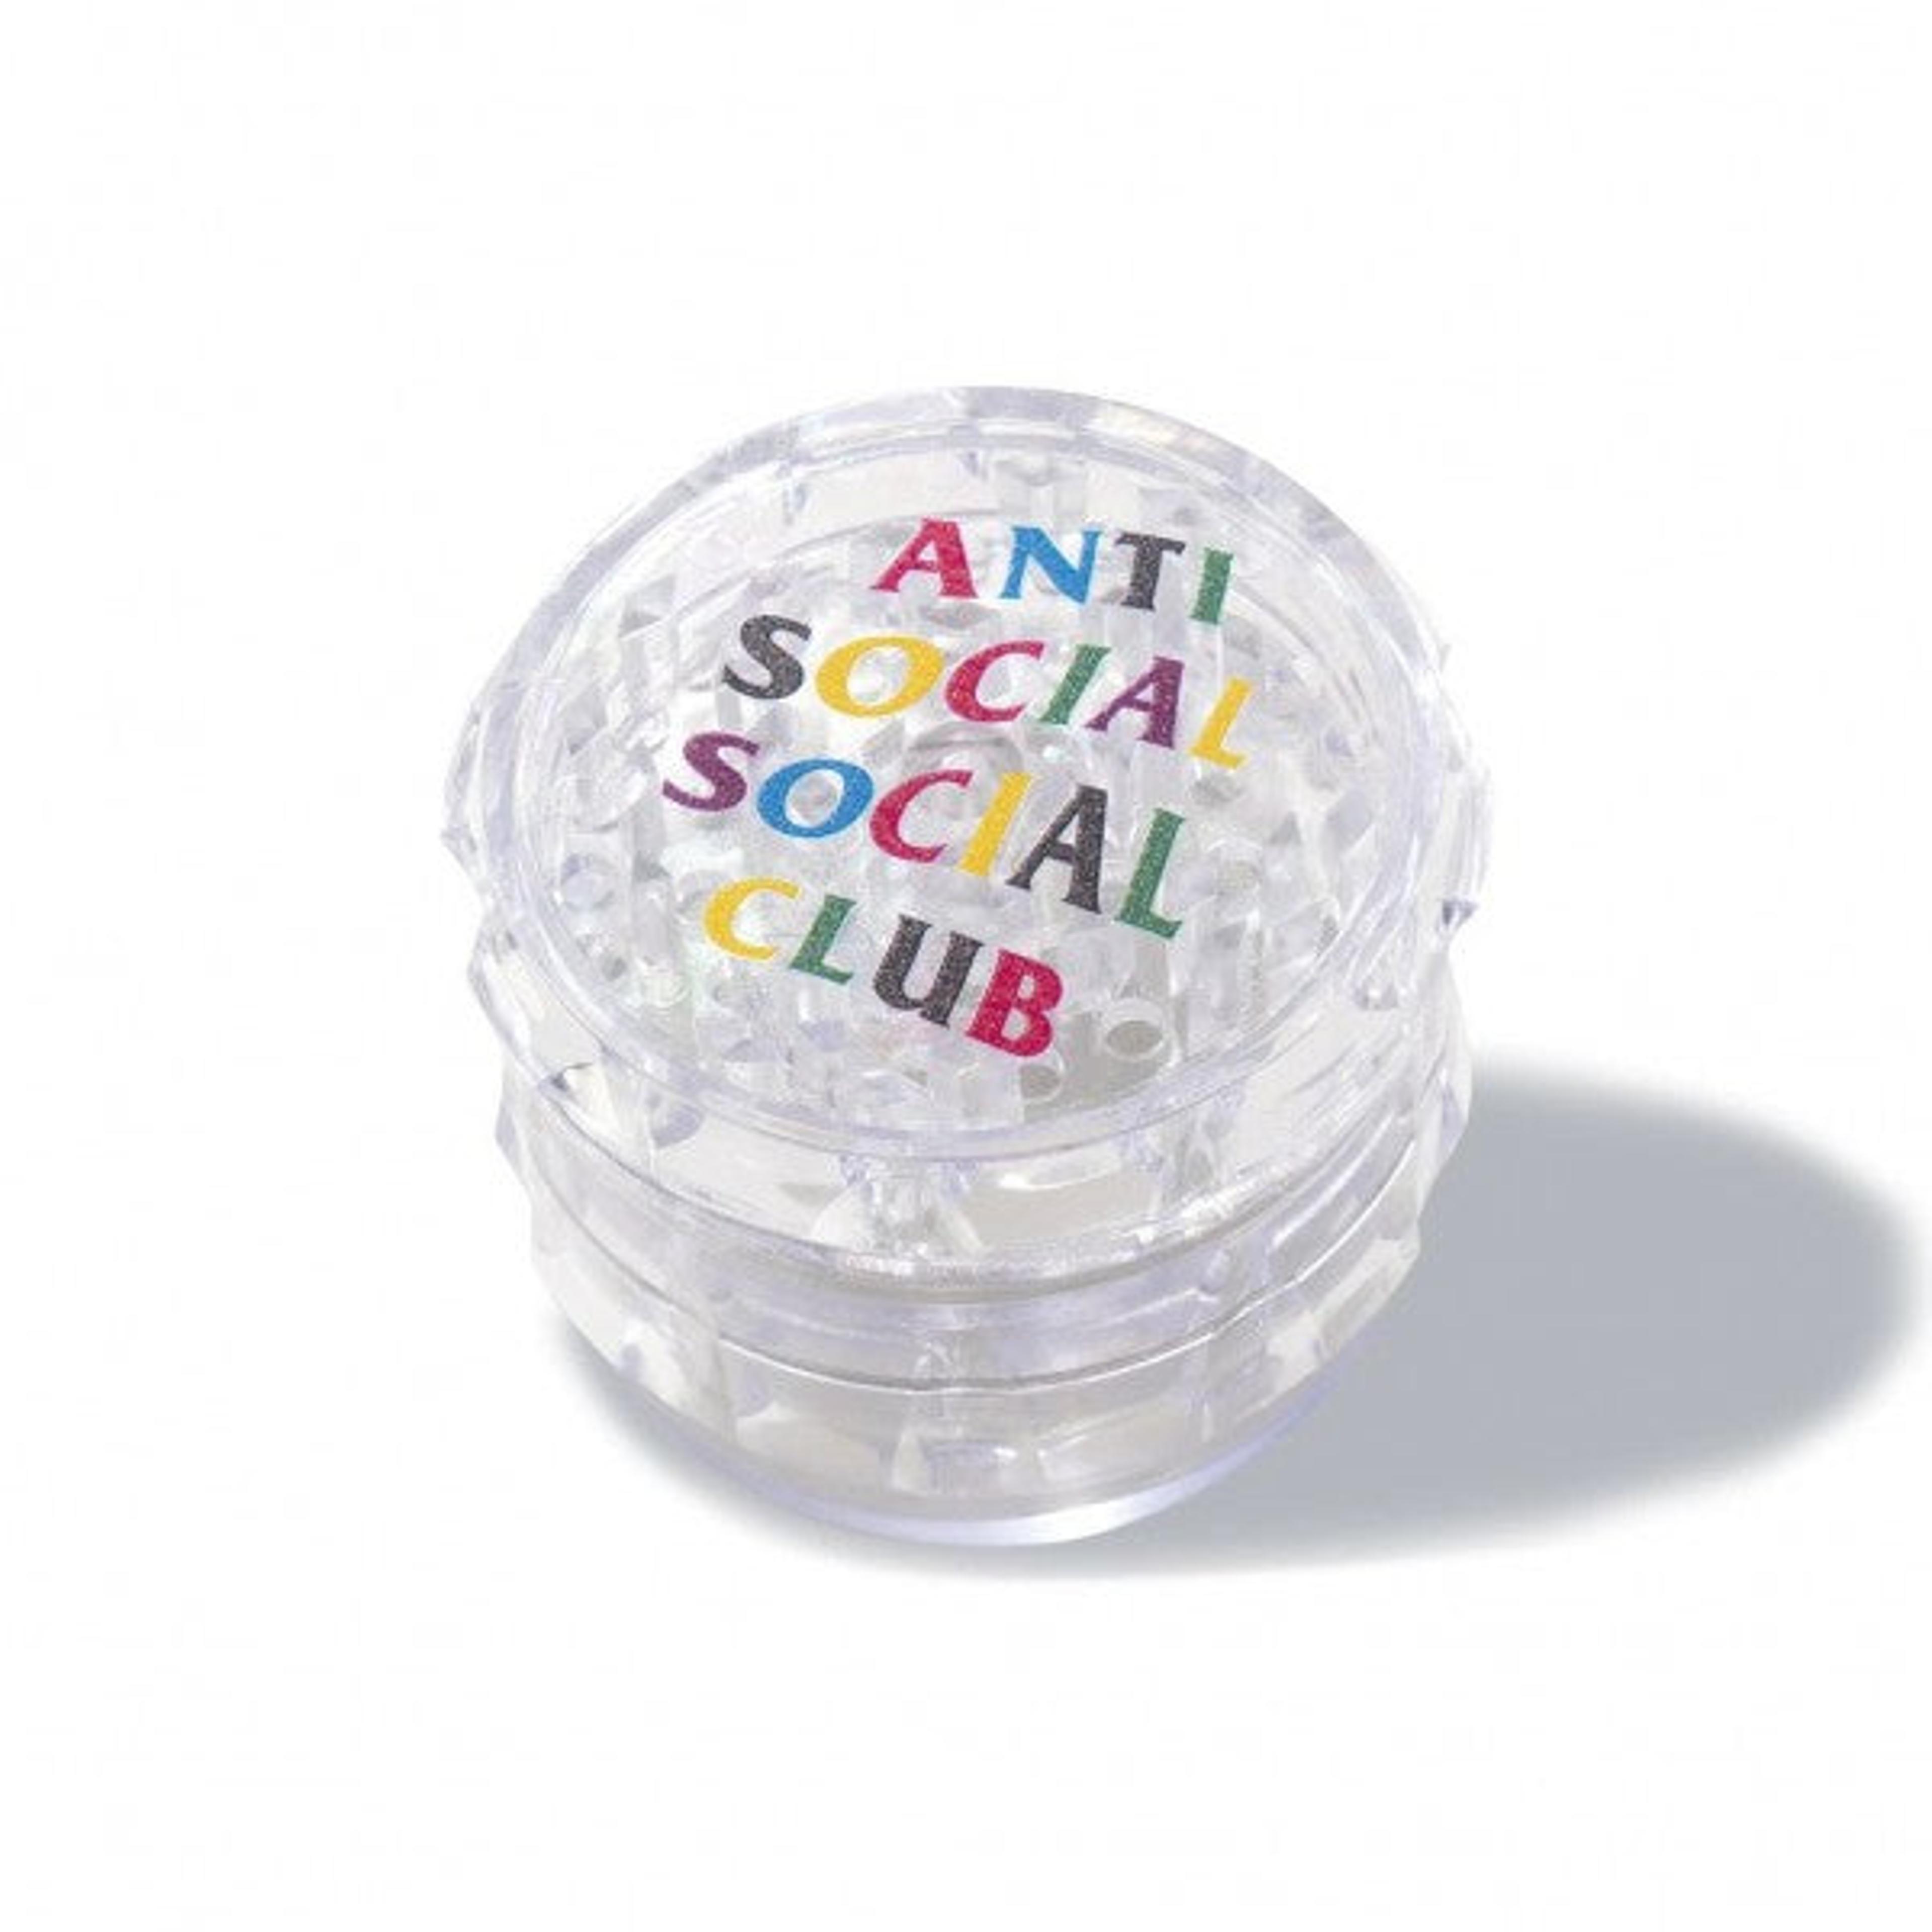 Anti Social Social Club Jellybean Grinder Clear